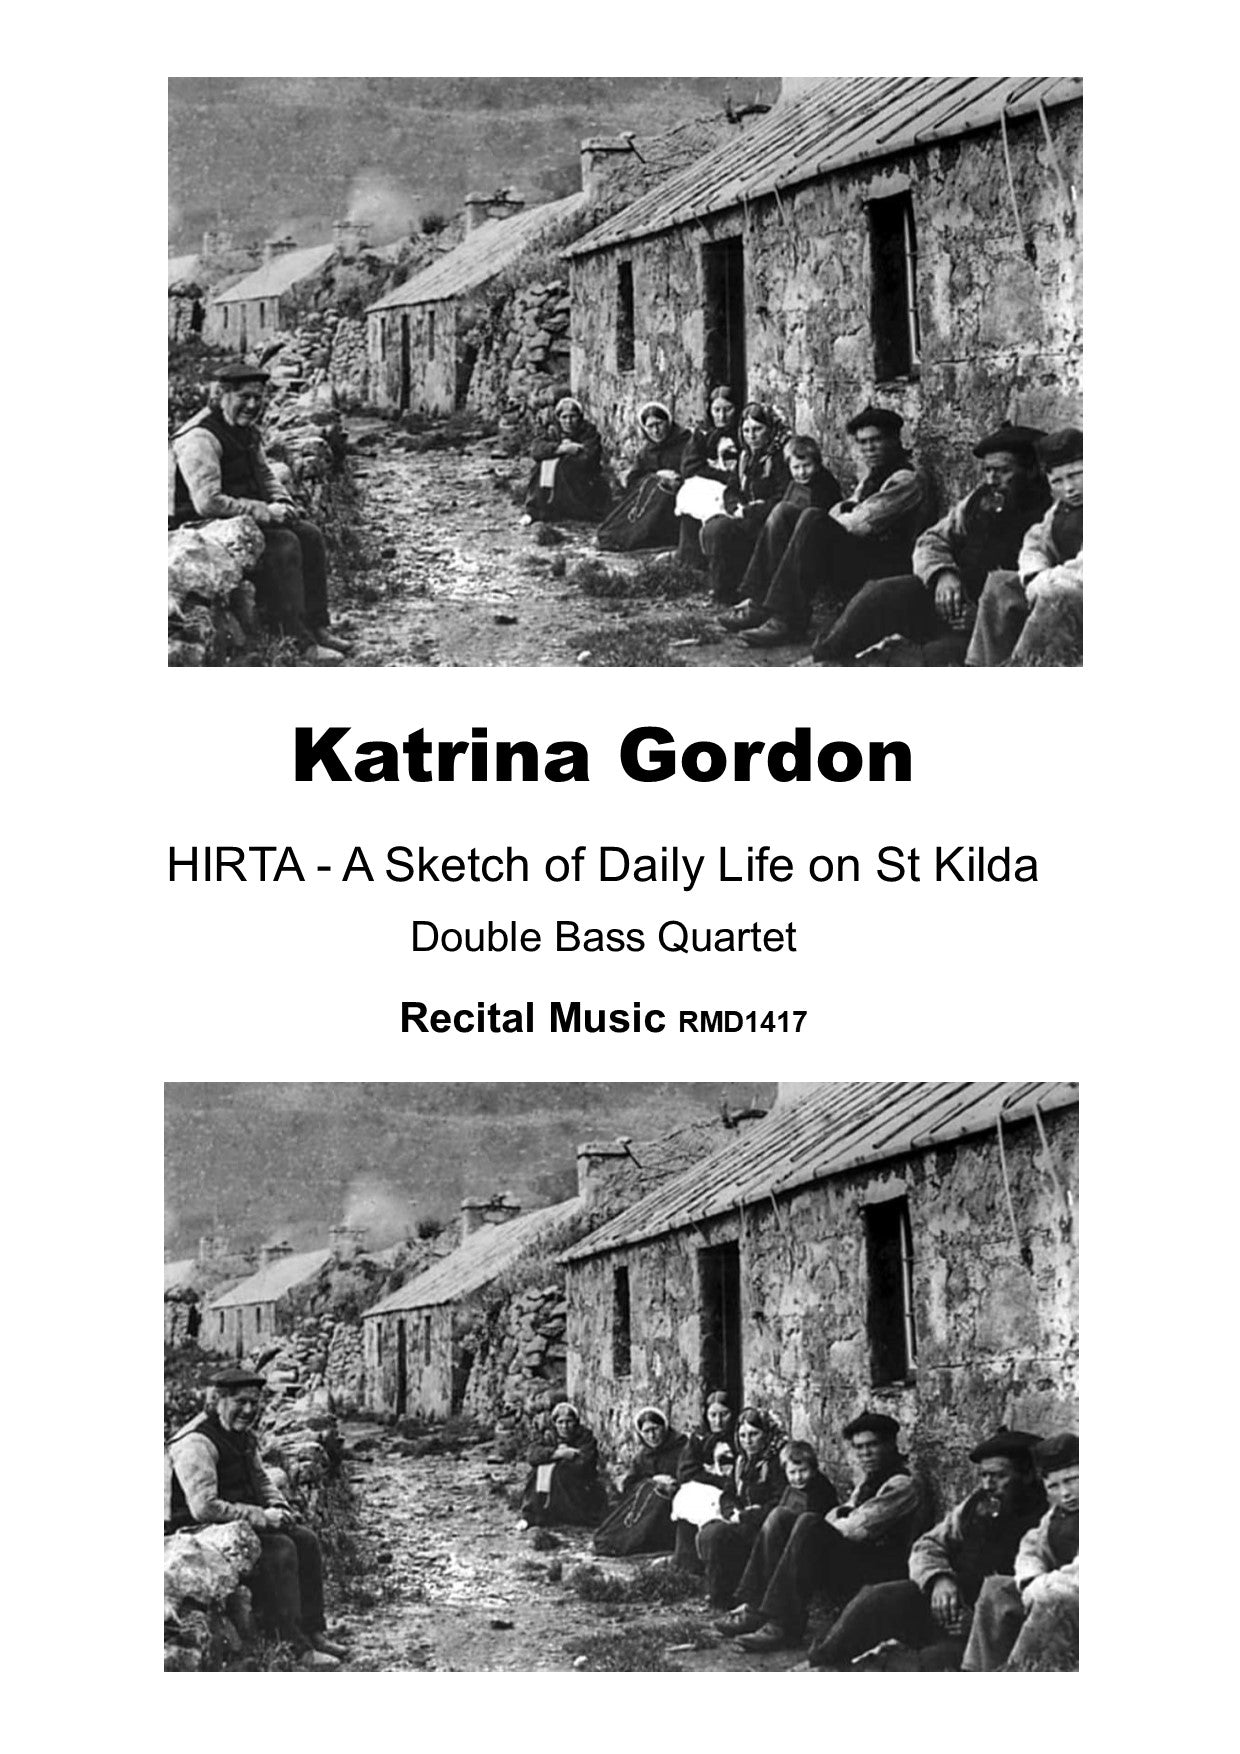 Katrina Gordon: Hirta (A Sketch of Daily Life on St Kilda) for double bass quartet